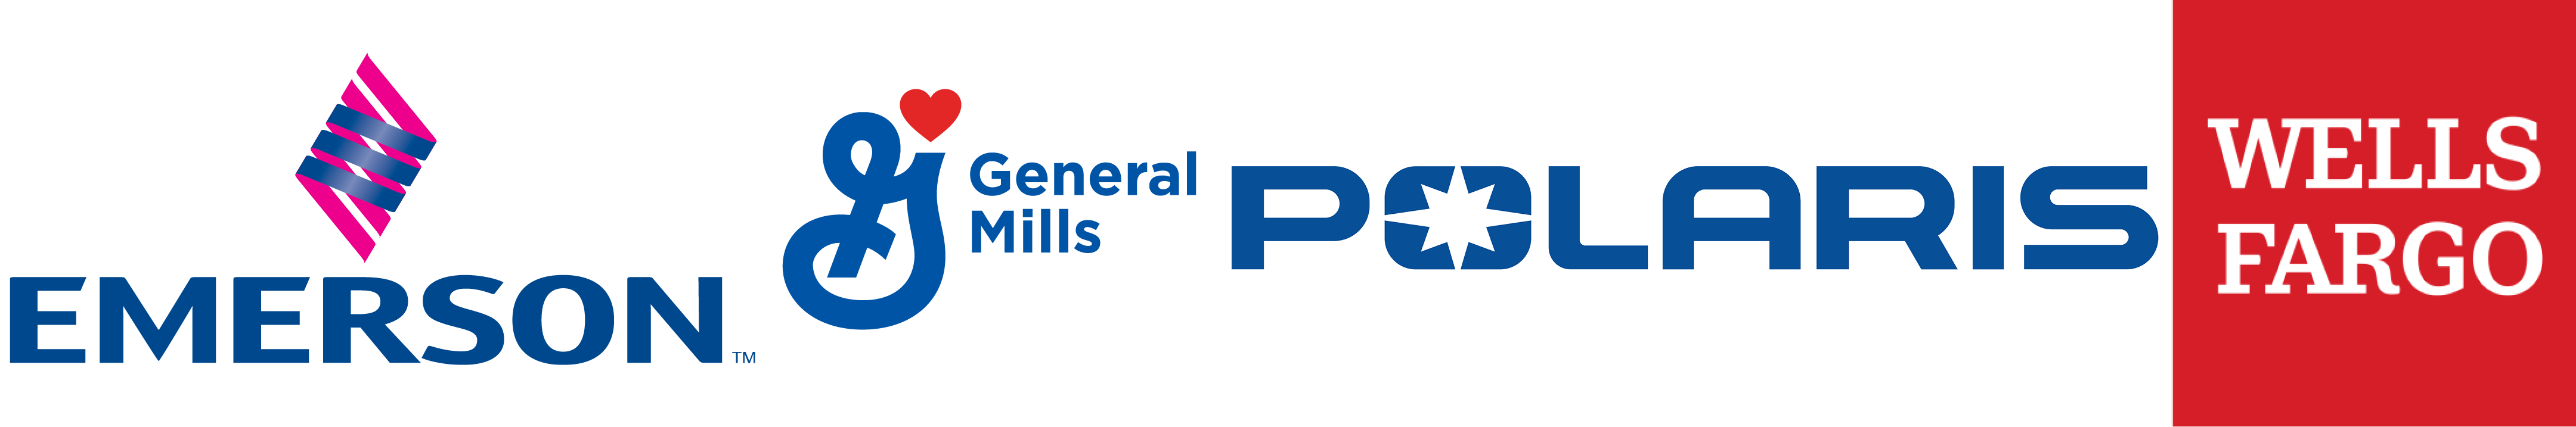 Emerson, General Mills, Polaris, Wells Fargo logos